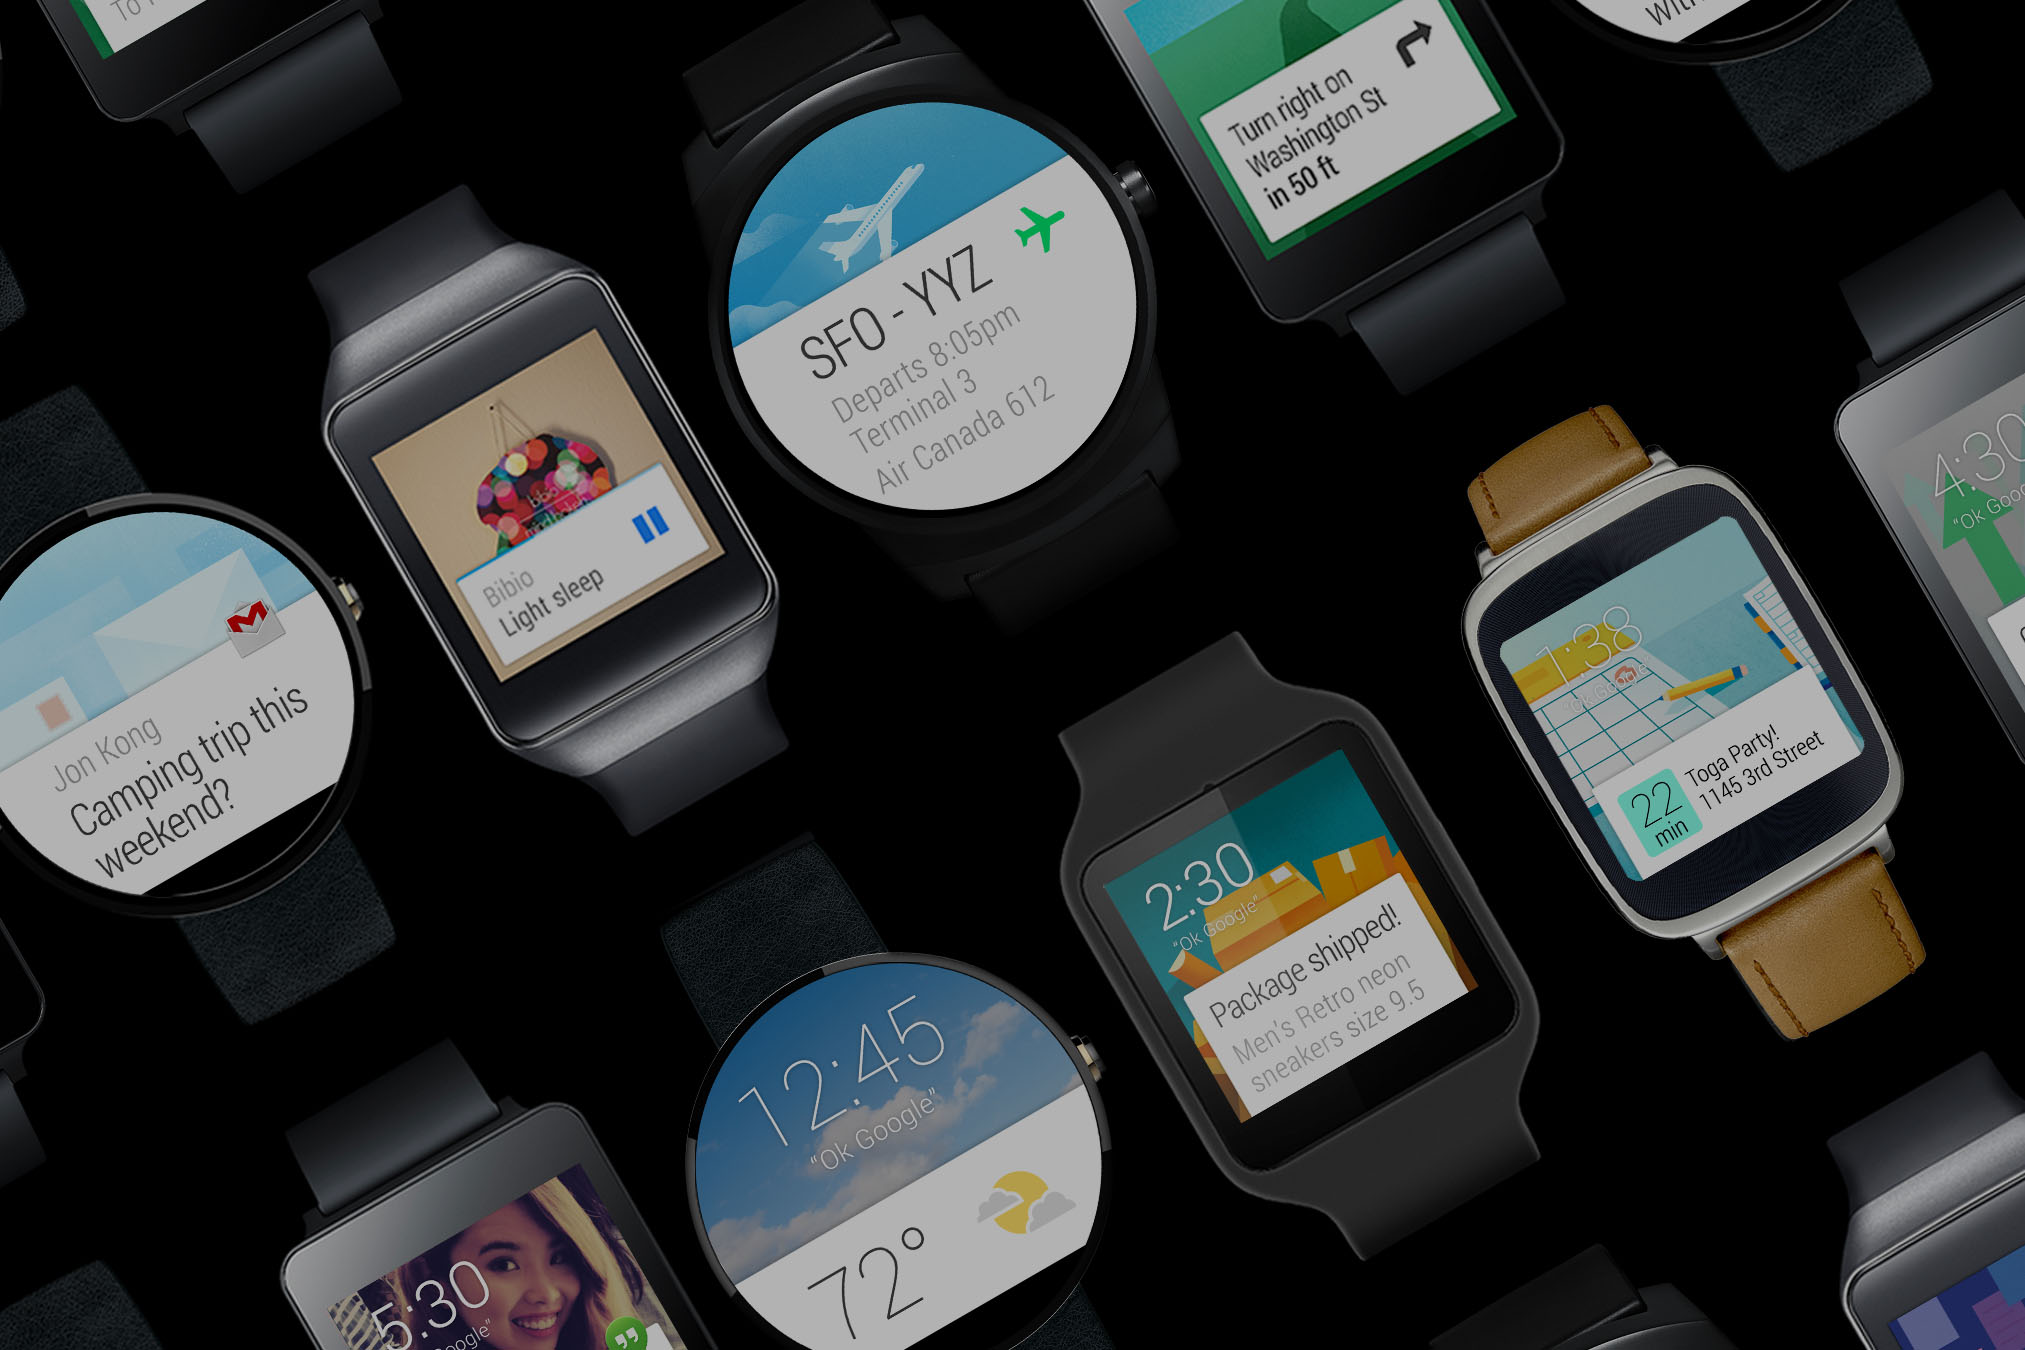 android wear collection | android wear | Google ประกาศอัพเดท Android Wear เวอร์ชั่น 1.4 รองรับการโทรศัพท์ผ่านนาฬิกาและเพิ่มตัวเลือกภาษาเพิ่มเติมรวมทั้ง ภาษาไทย